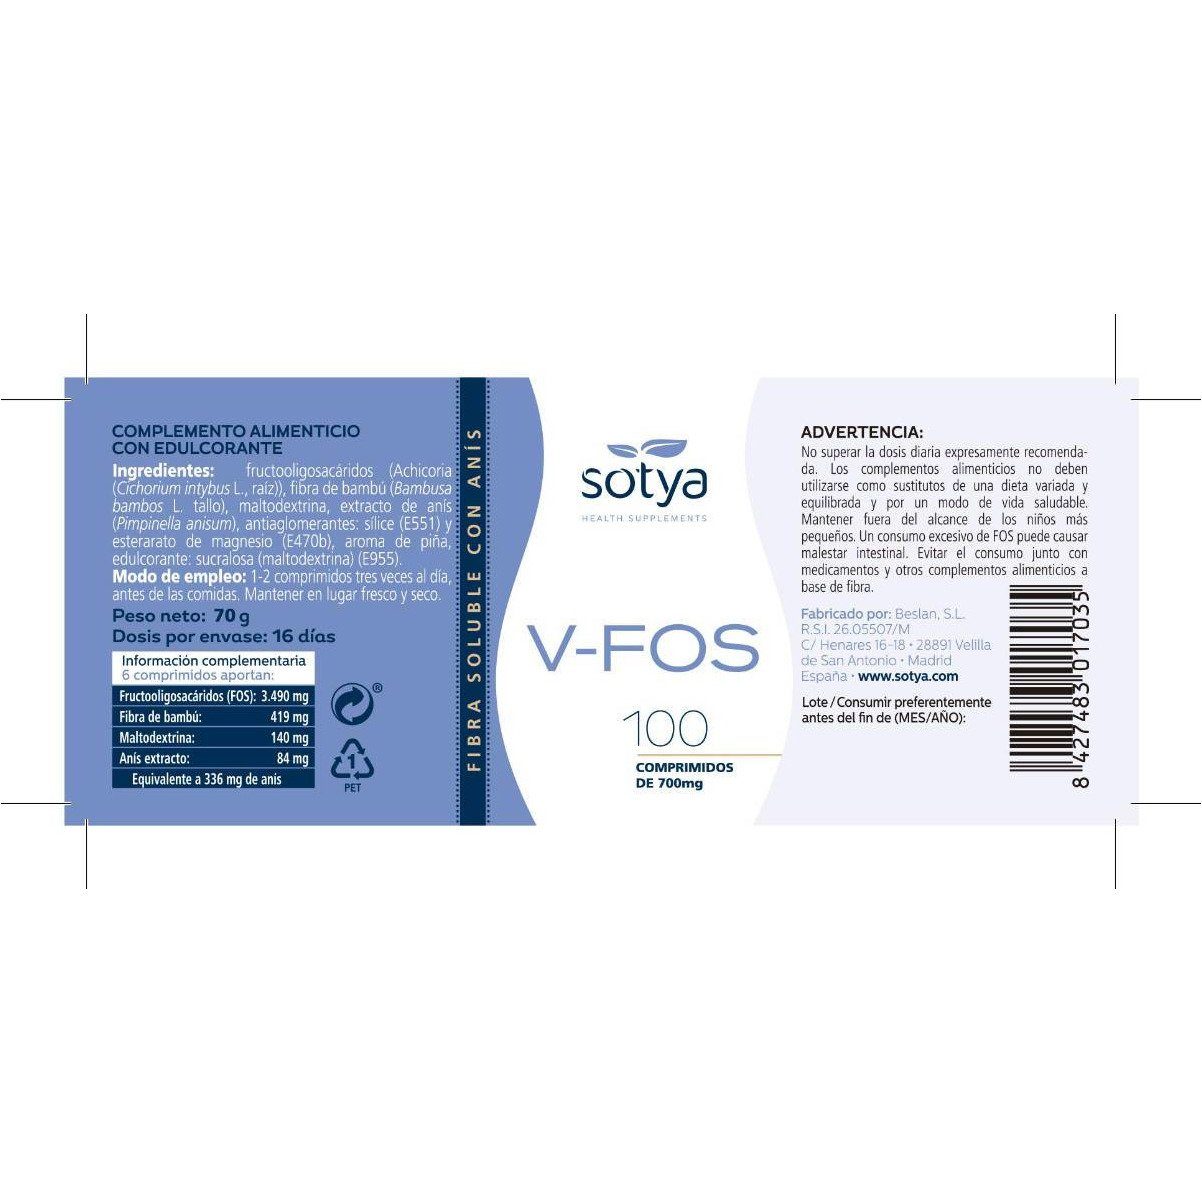 V-Fos 100 Comprimidos | Sotya - Dietetica Ferrer